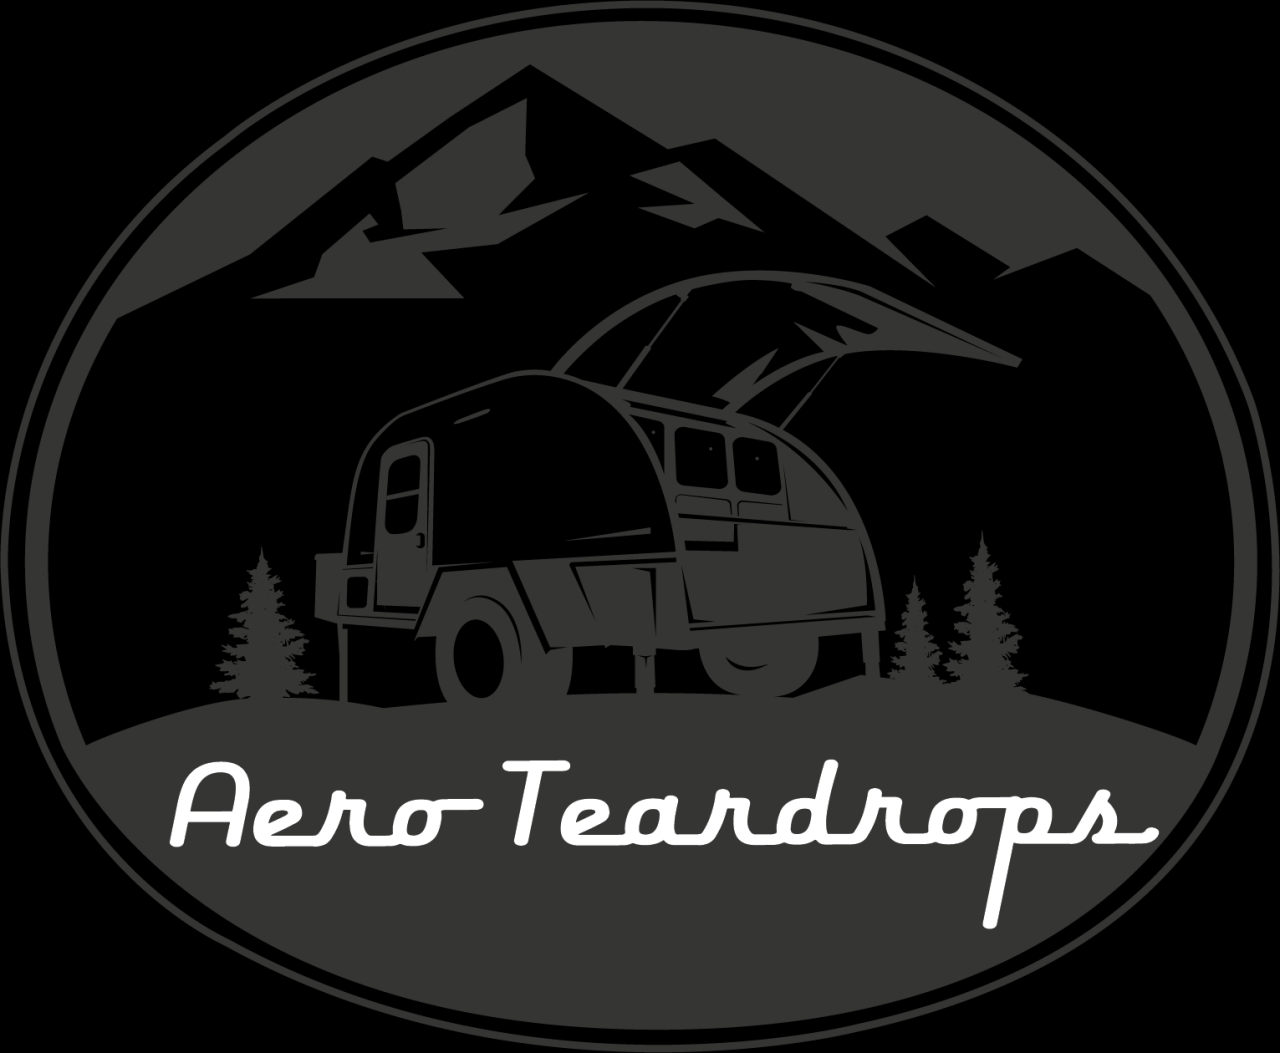 Aero Teardrops LLC